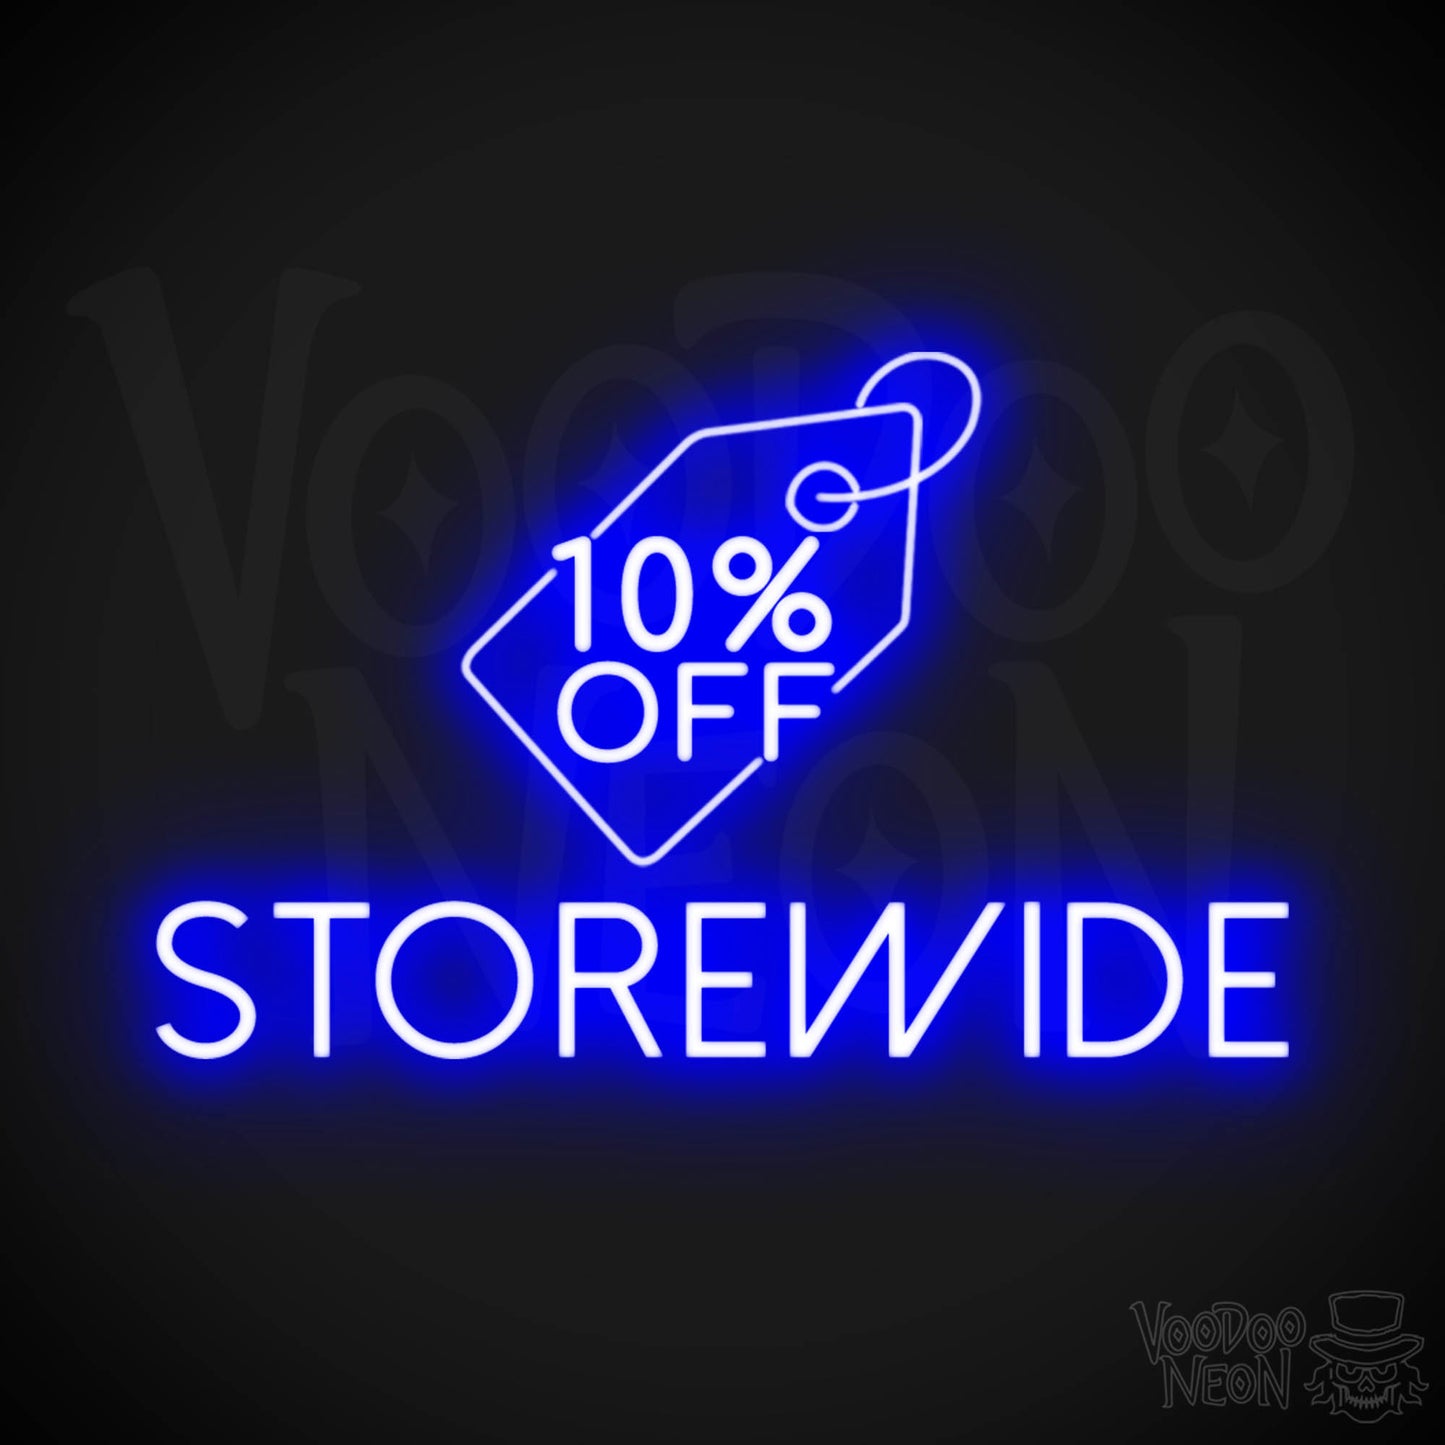 10% Off Storewide Neon Sign - 10% Off Storewide Sign - Neon Shop Signs - Color Dark Blue